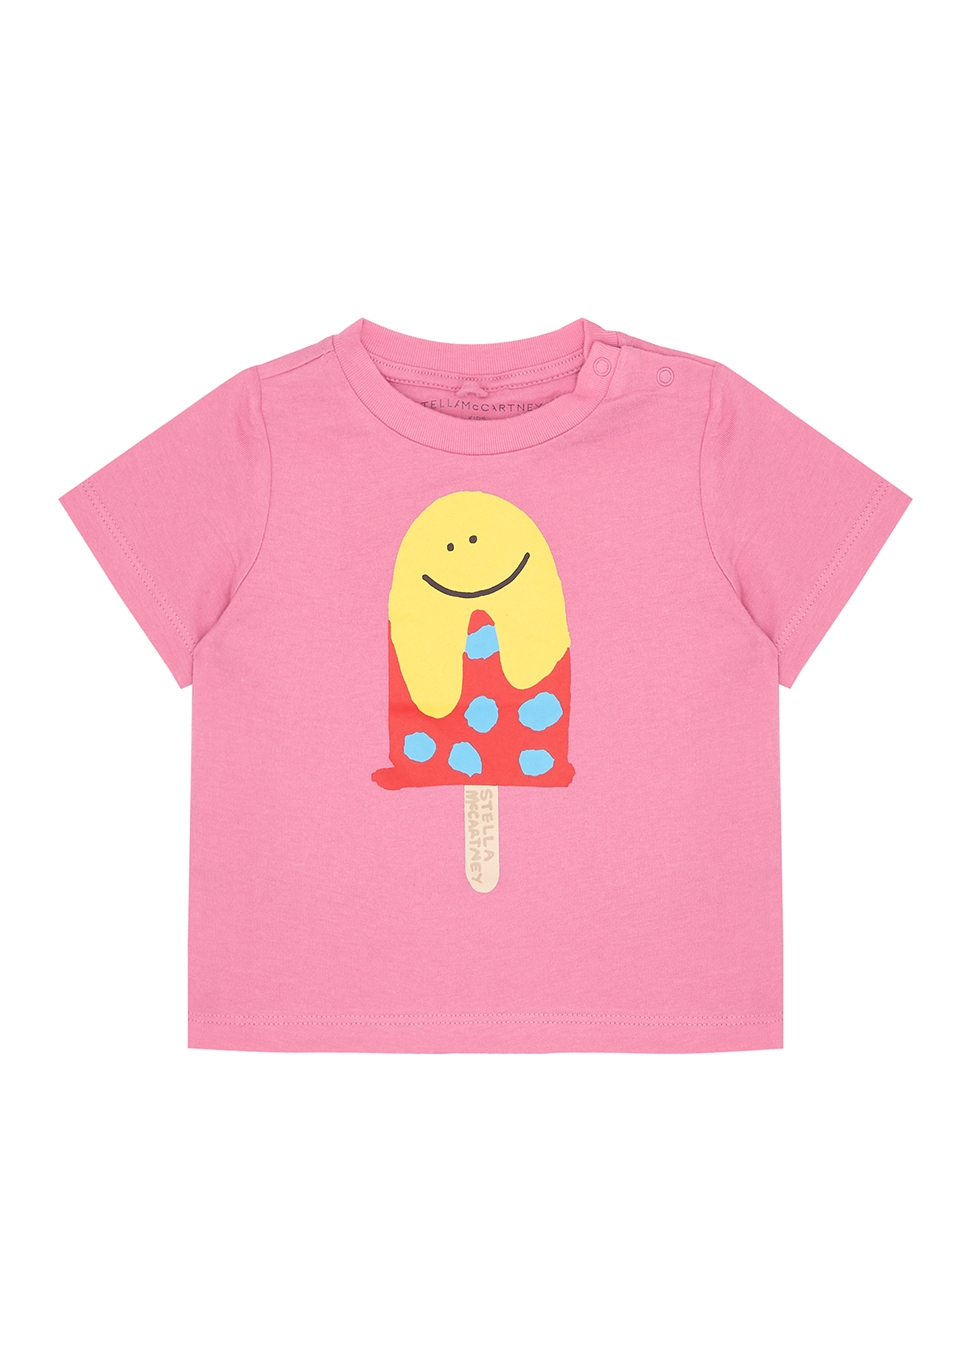 KIDS Pink printed cotton T-shirt (3-36 months)